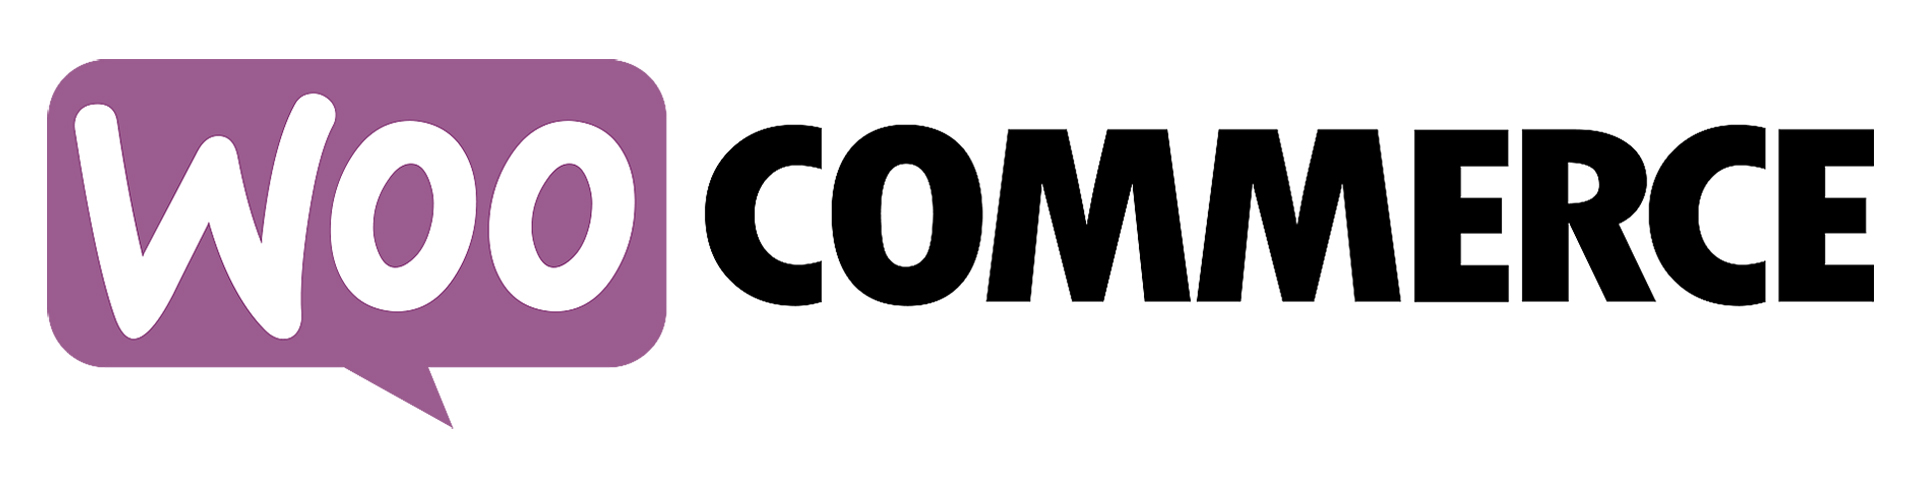 woocommerce-logo.jpg